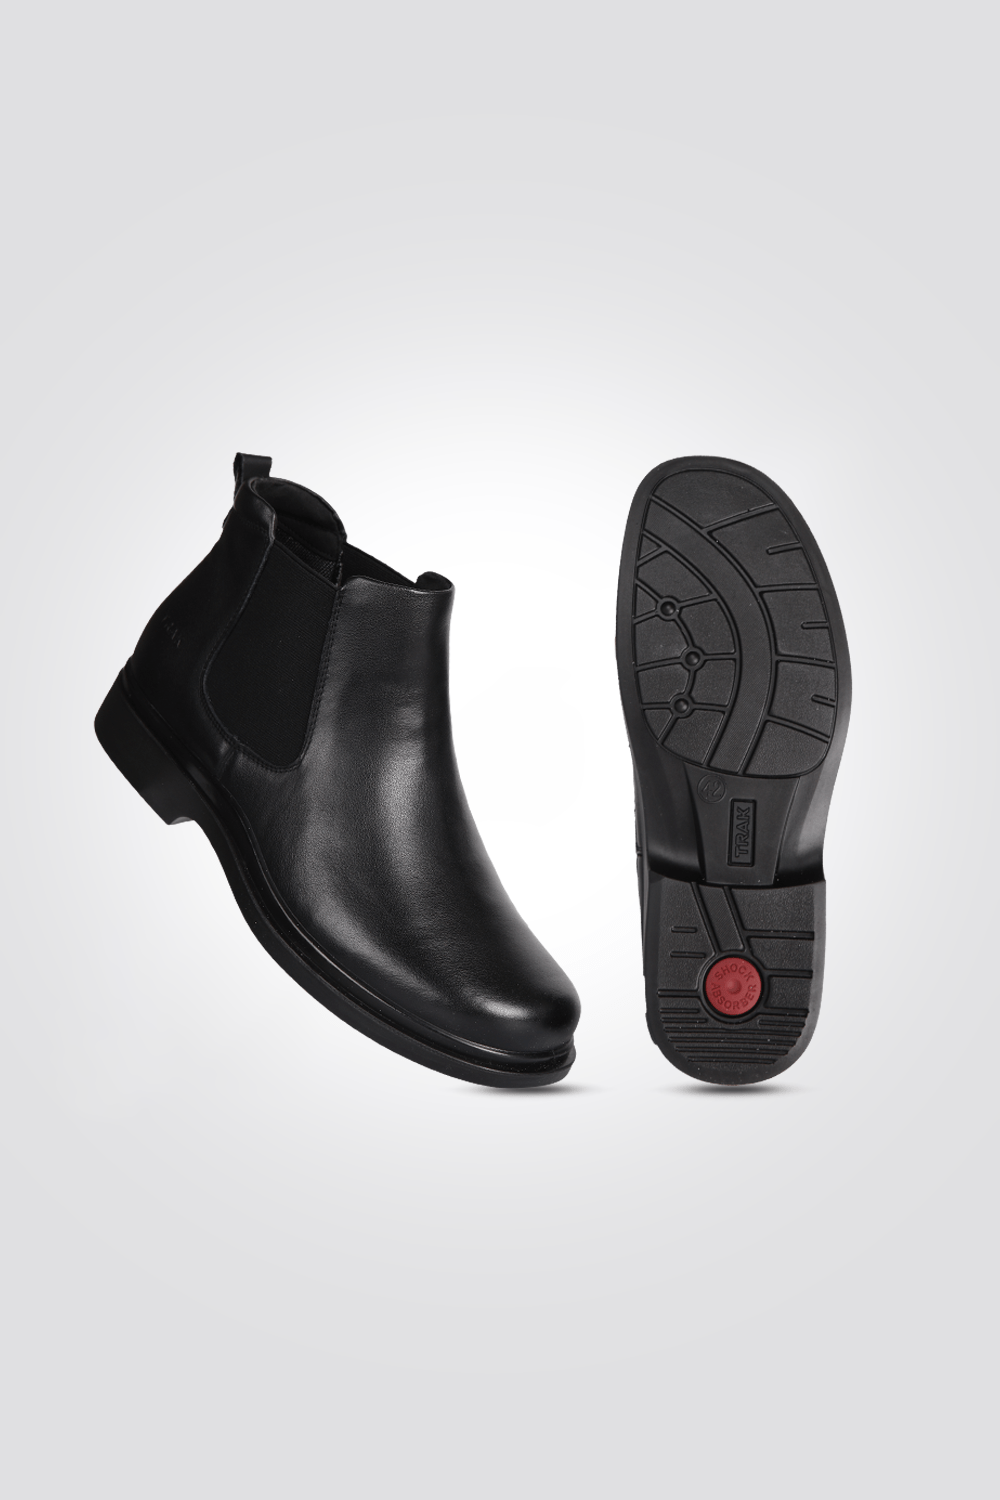 TRAK - נעליים אלגנטיות לגברים מאיר בצבע שחור - MASHBIR//365